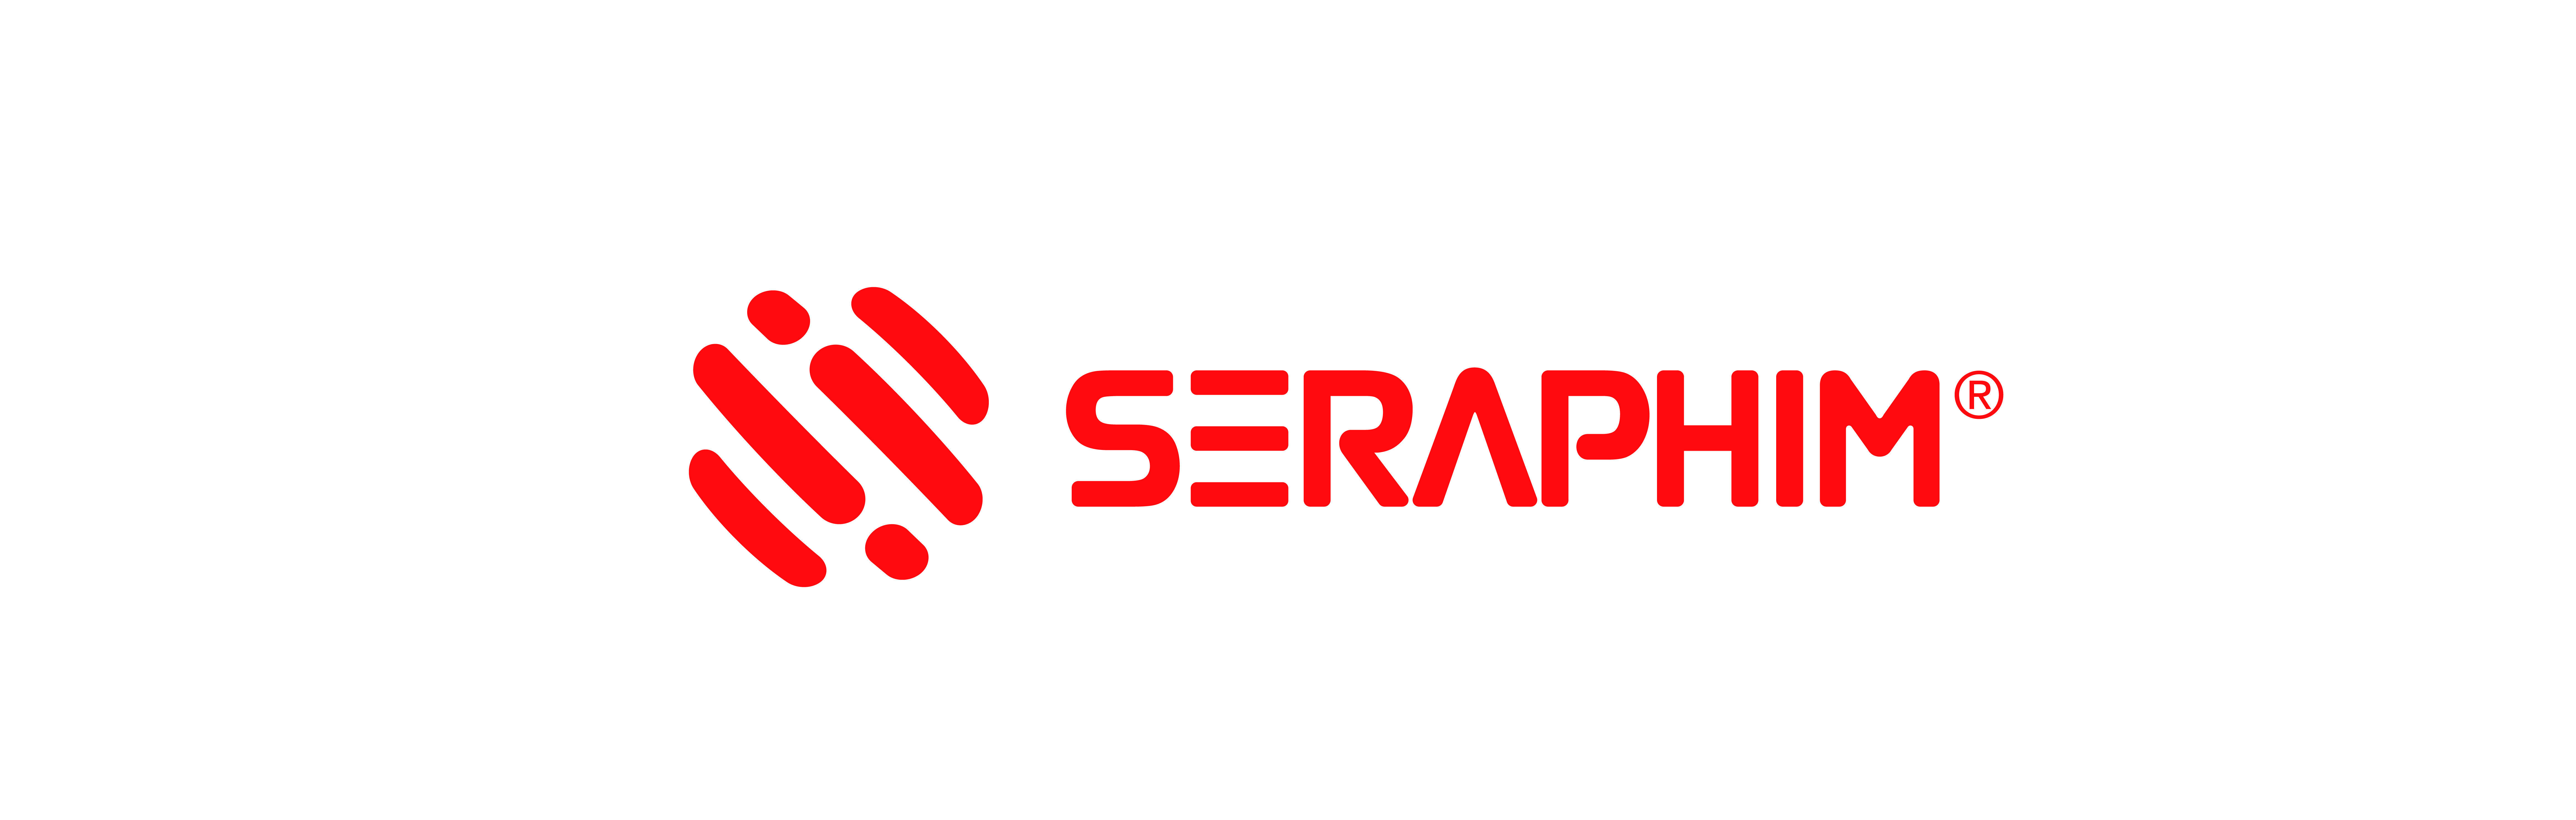 Seraphim Logo - Seraphim-logo - The Solar Power Co